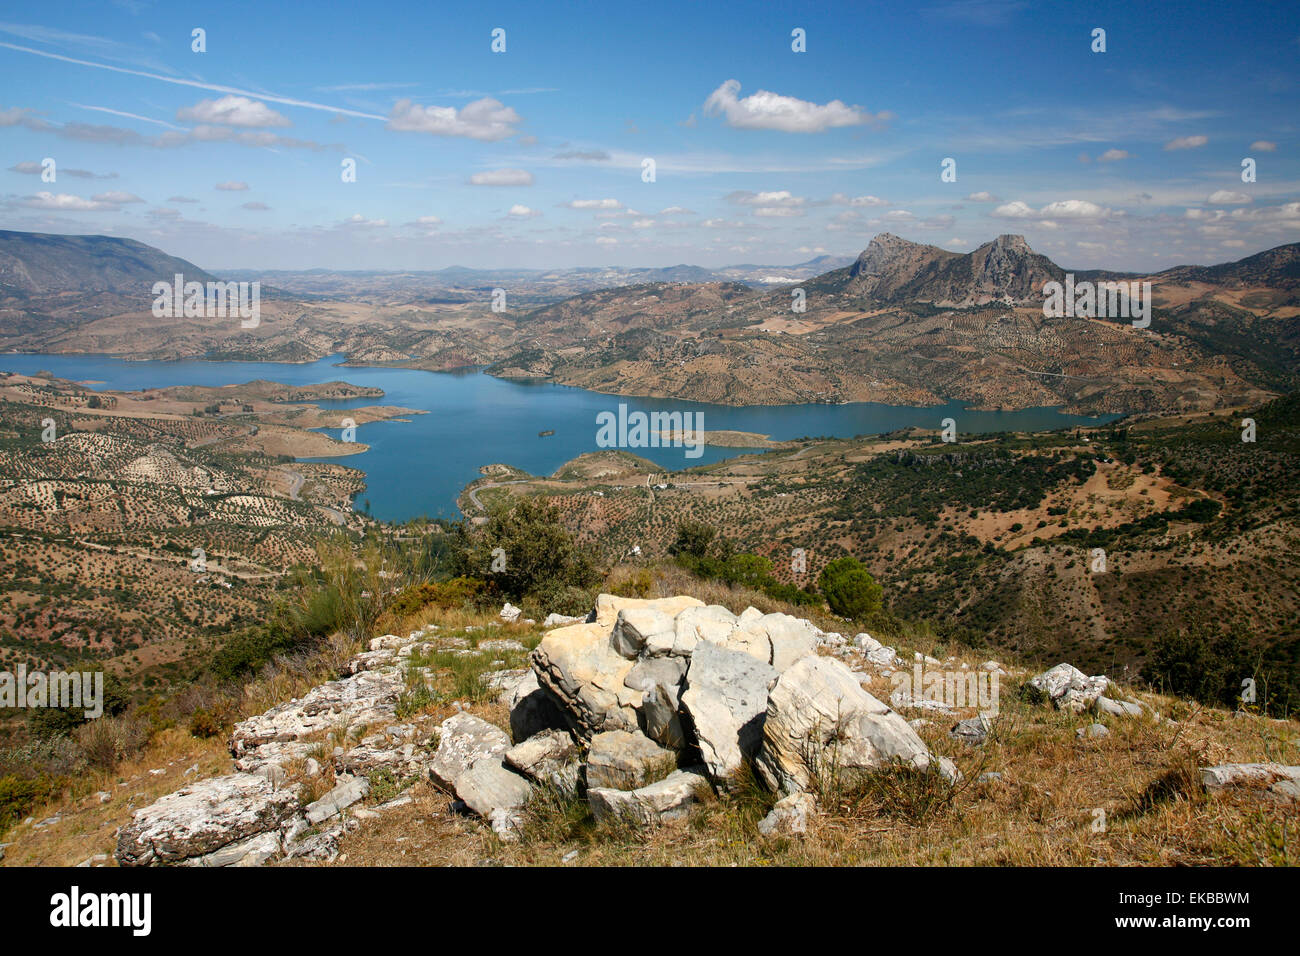 View over the Embalse de Zahara reservoir, Parque Natural Sierra de Grazalema, Andalucia, Spain, Europe Stock Photo